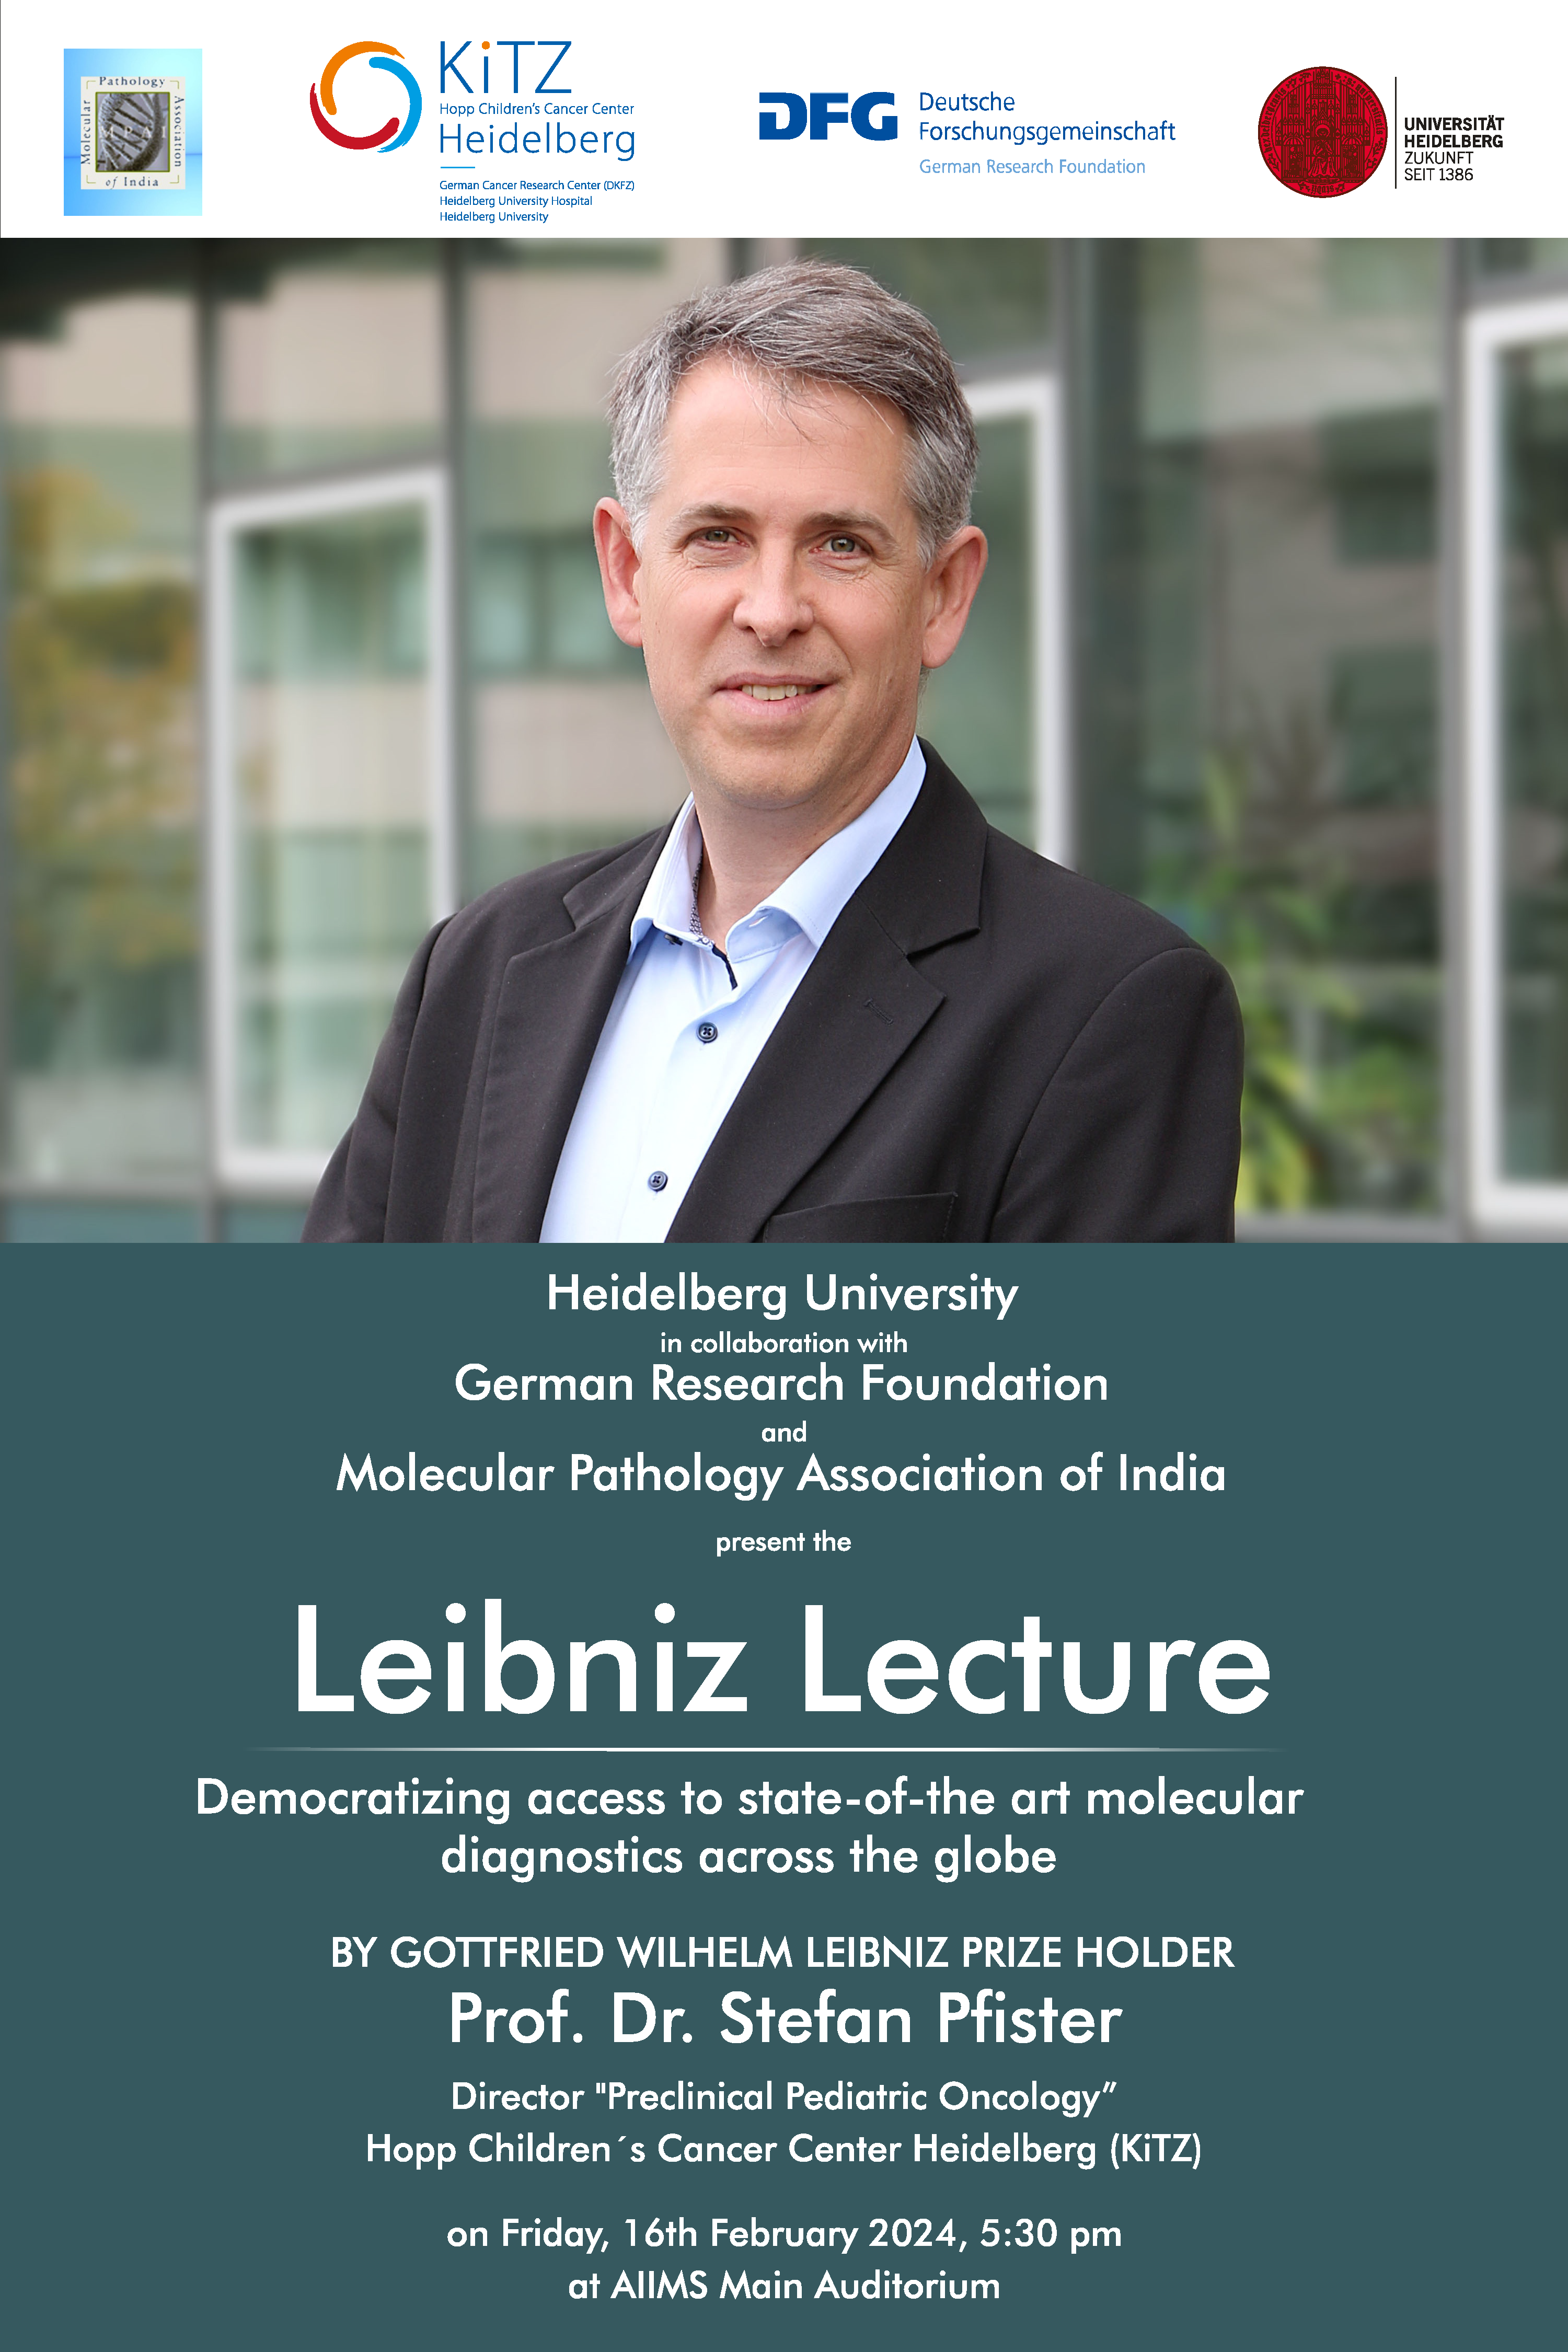 Leibniz Lecture: Democratizing access to state-of-the-art molecular diagnostics accross the globe